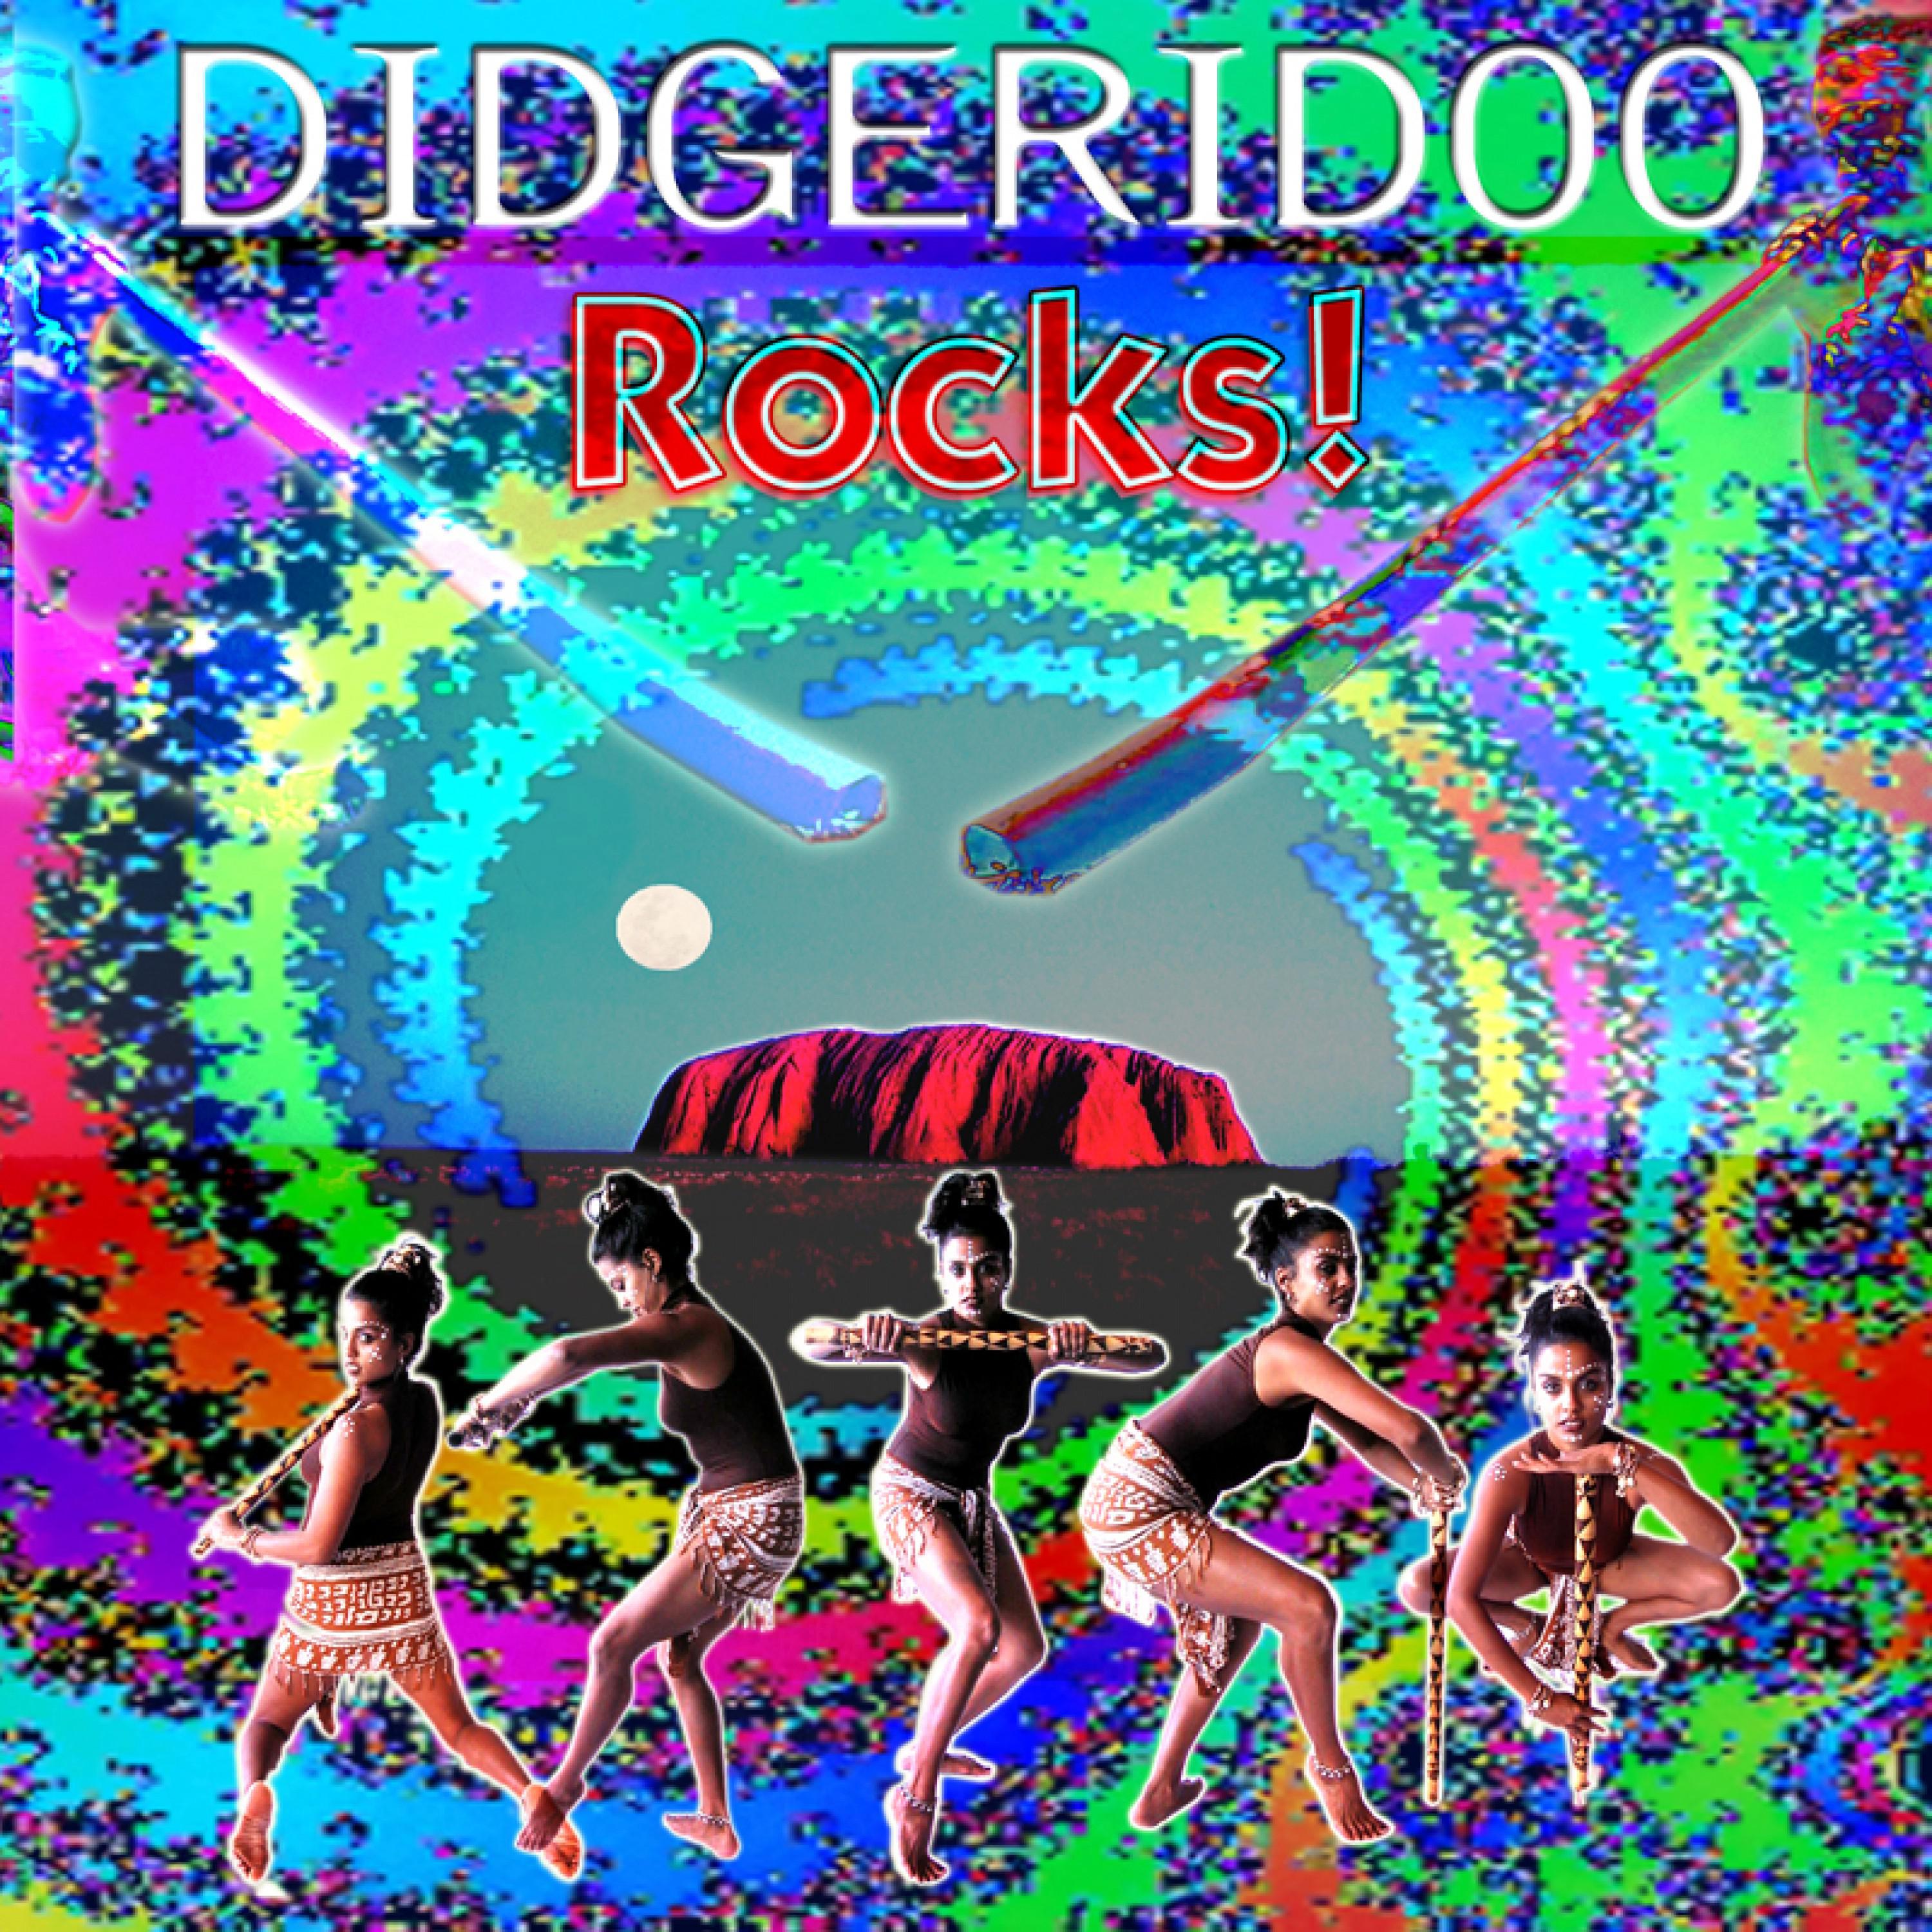 Didgeridoo Rocks!